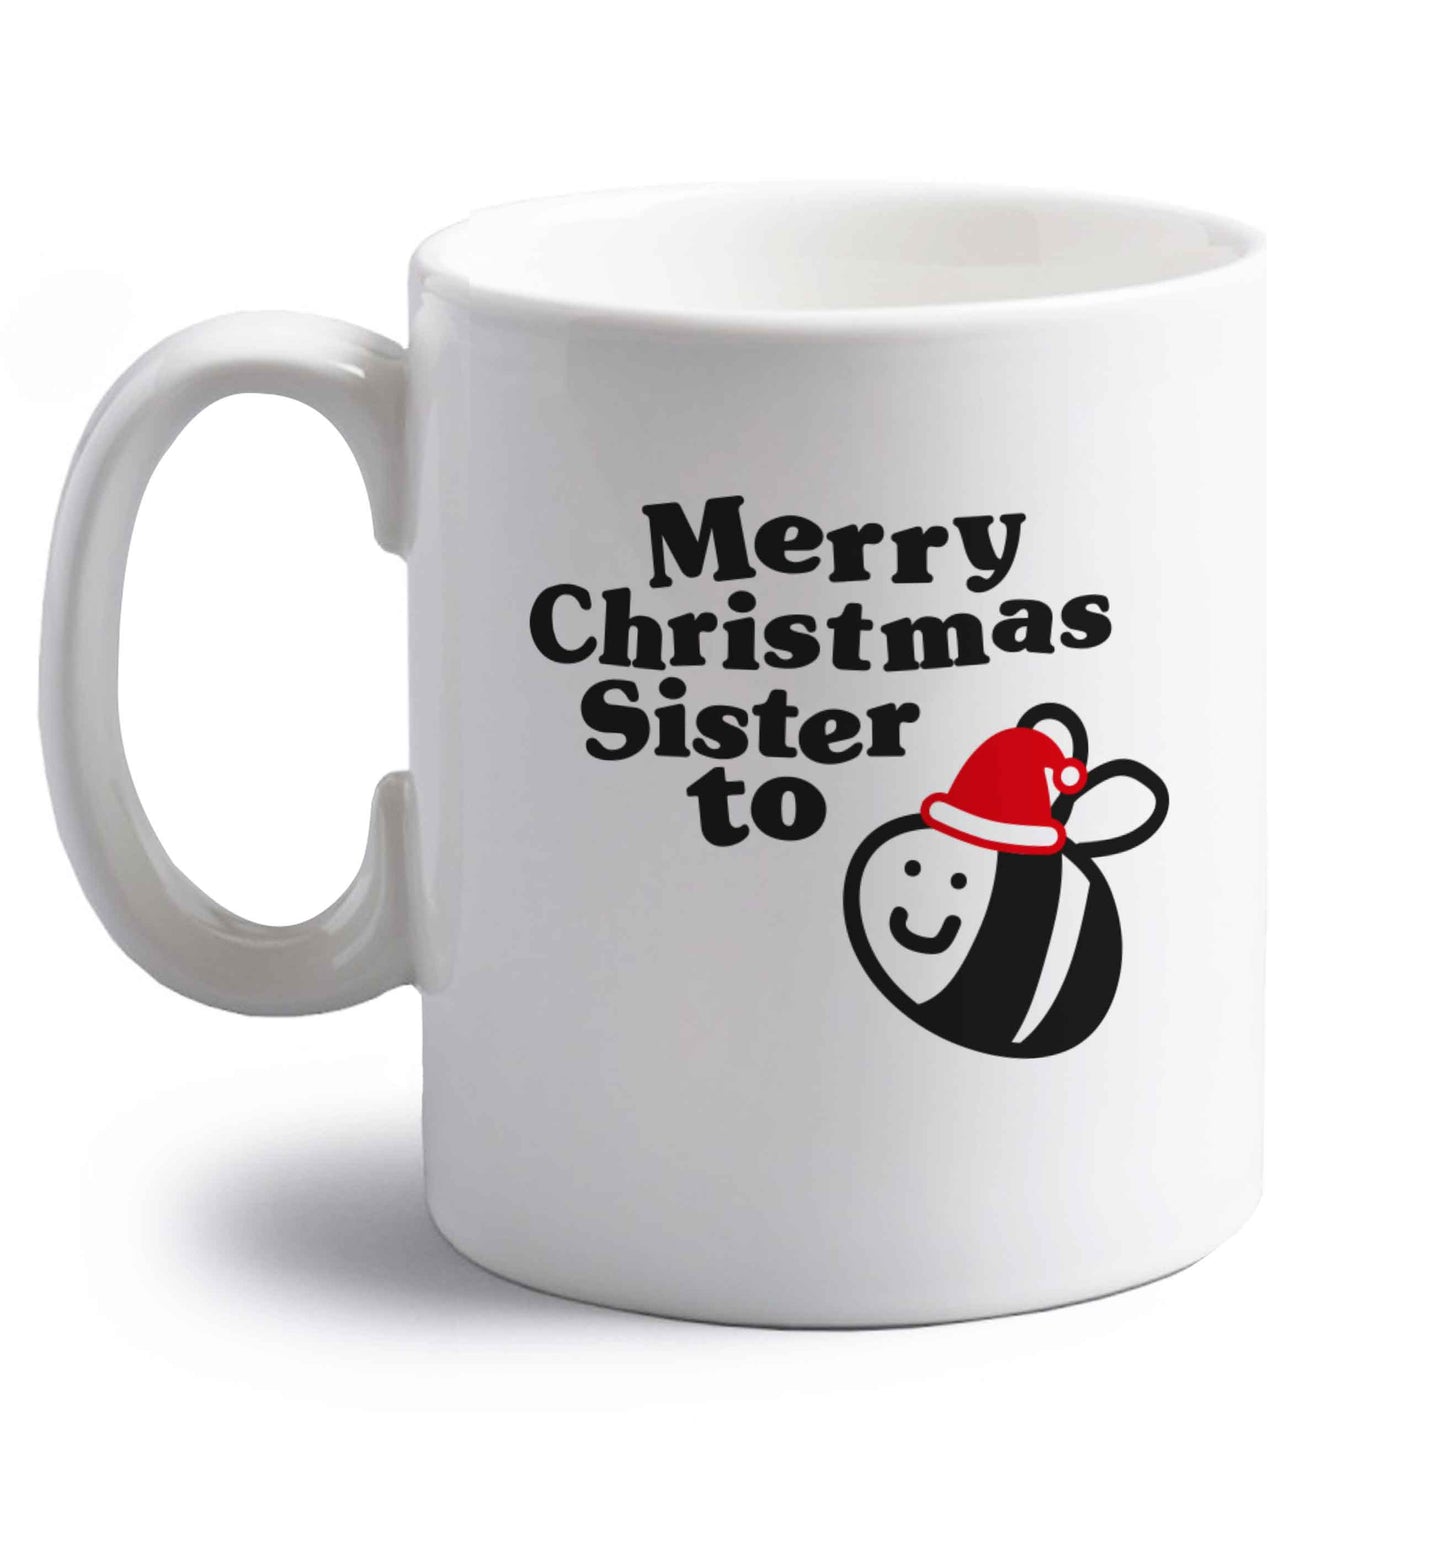 Merry Christmas sister to be right handed white ceramic mug 